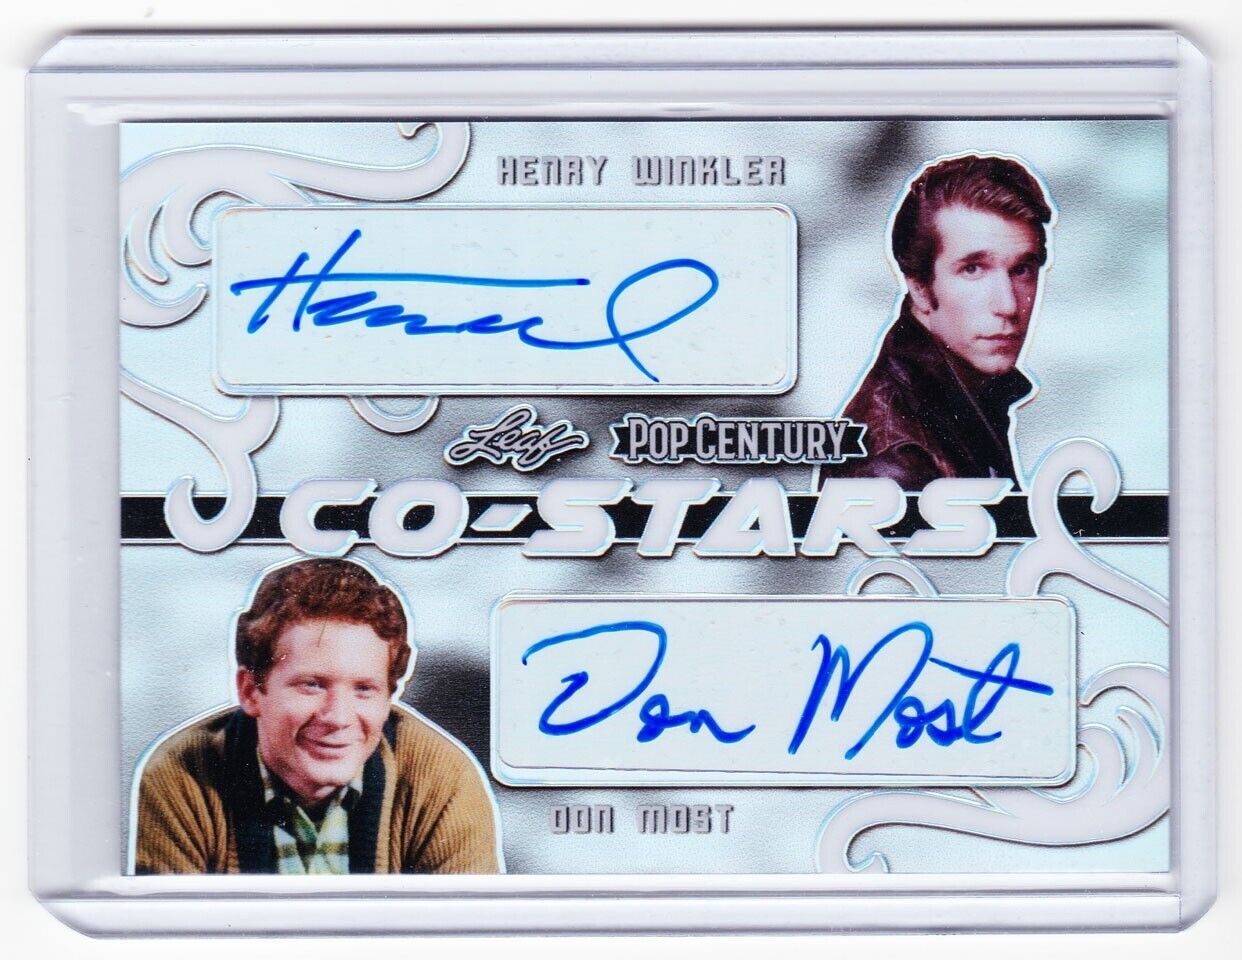 Henry Winkler & Don Most 2020 Pop Century Autograph Card # /26  Happy Days Auto